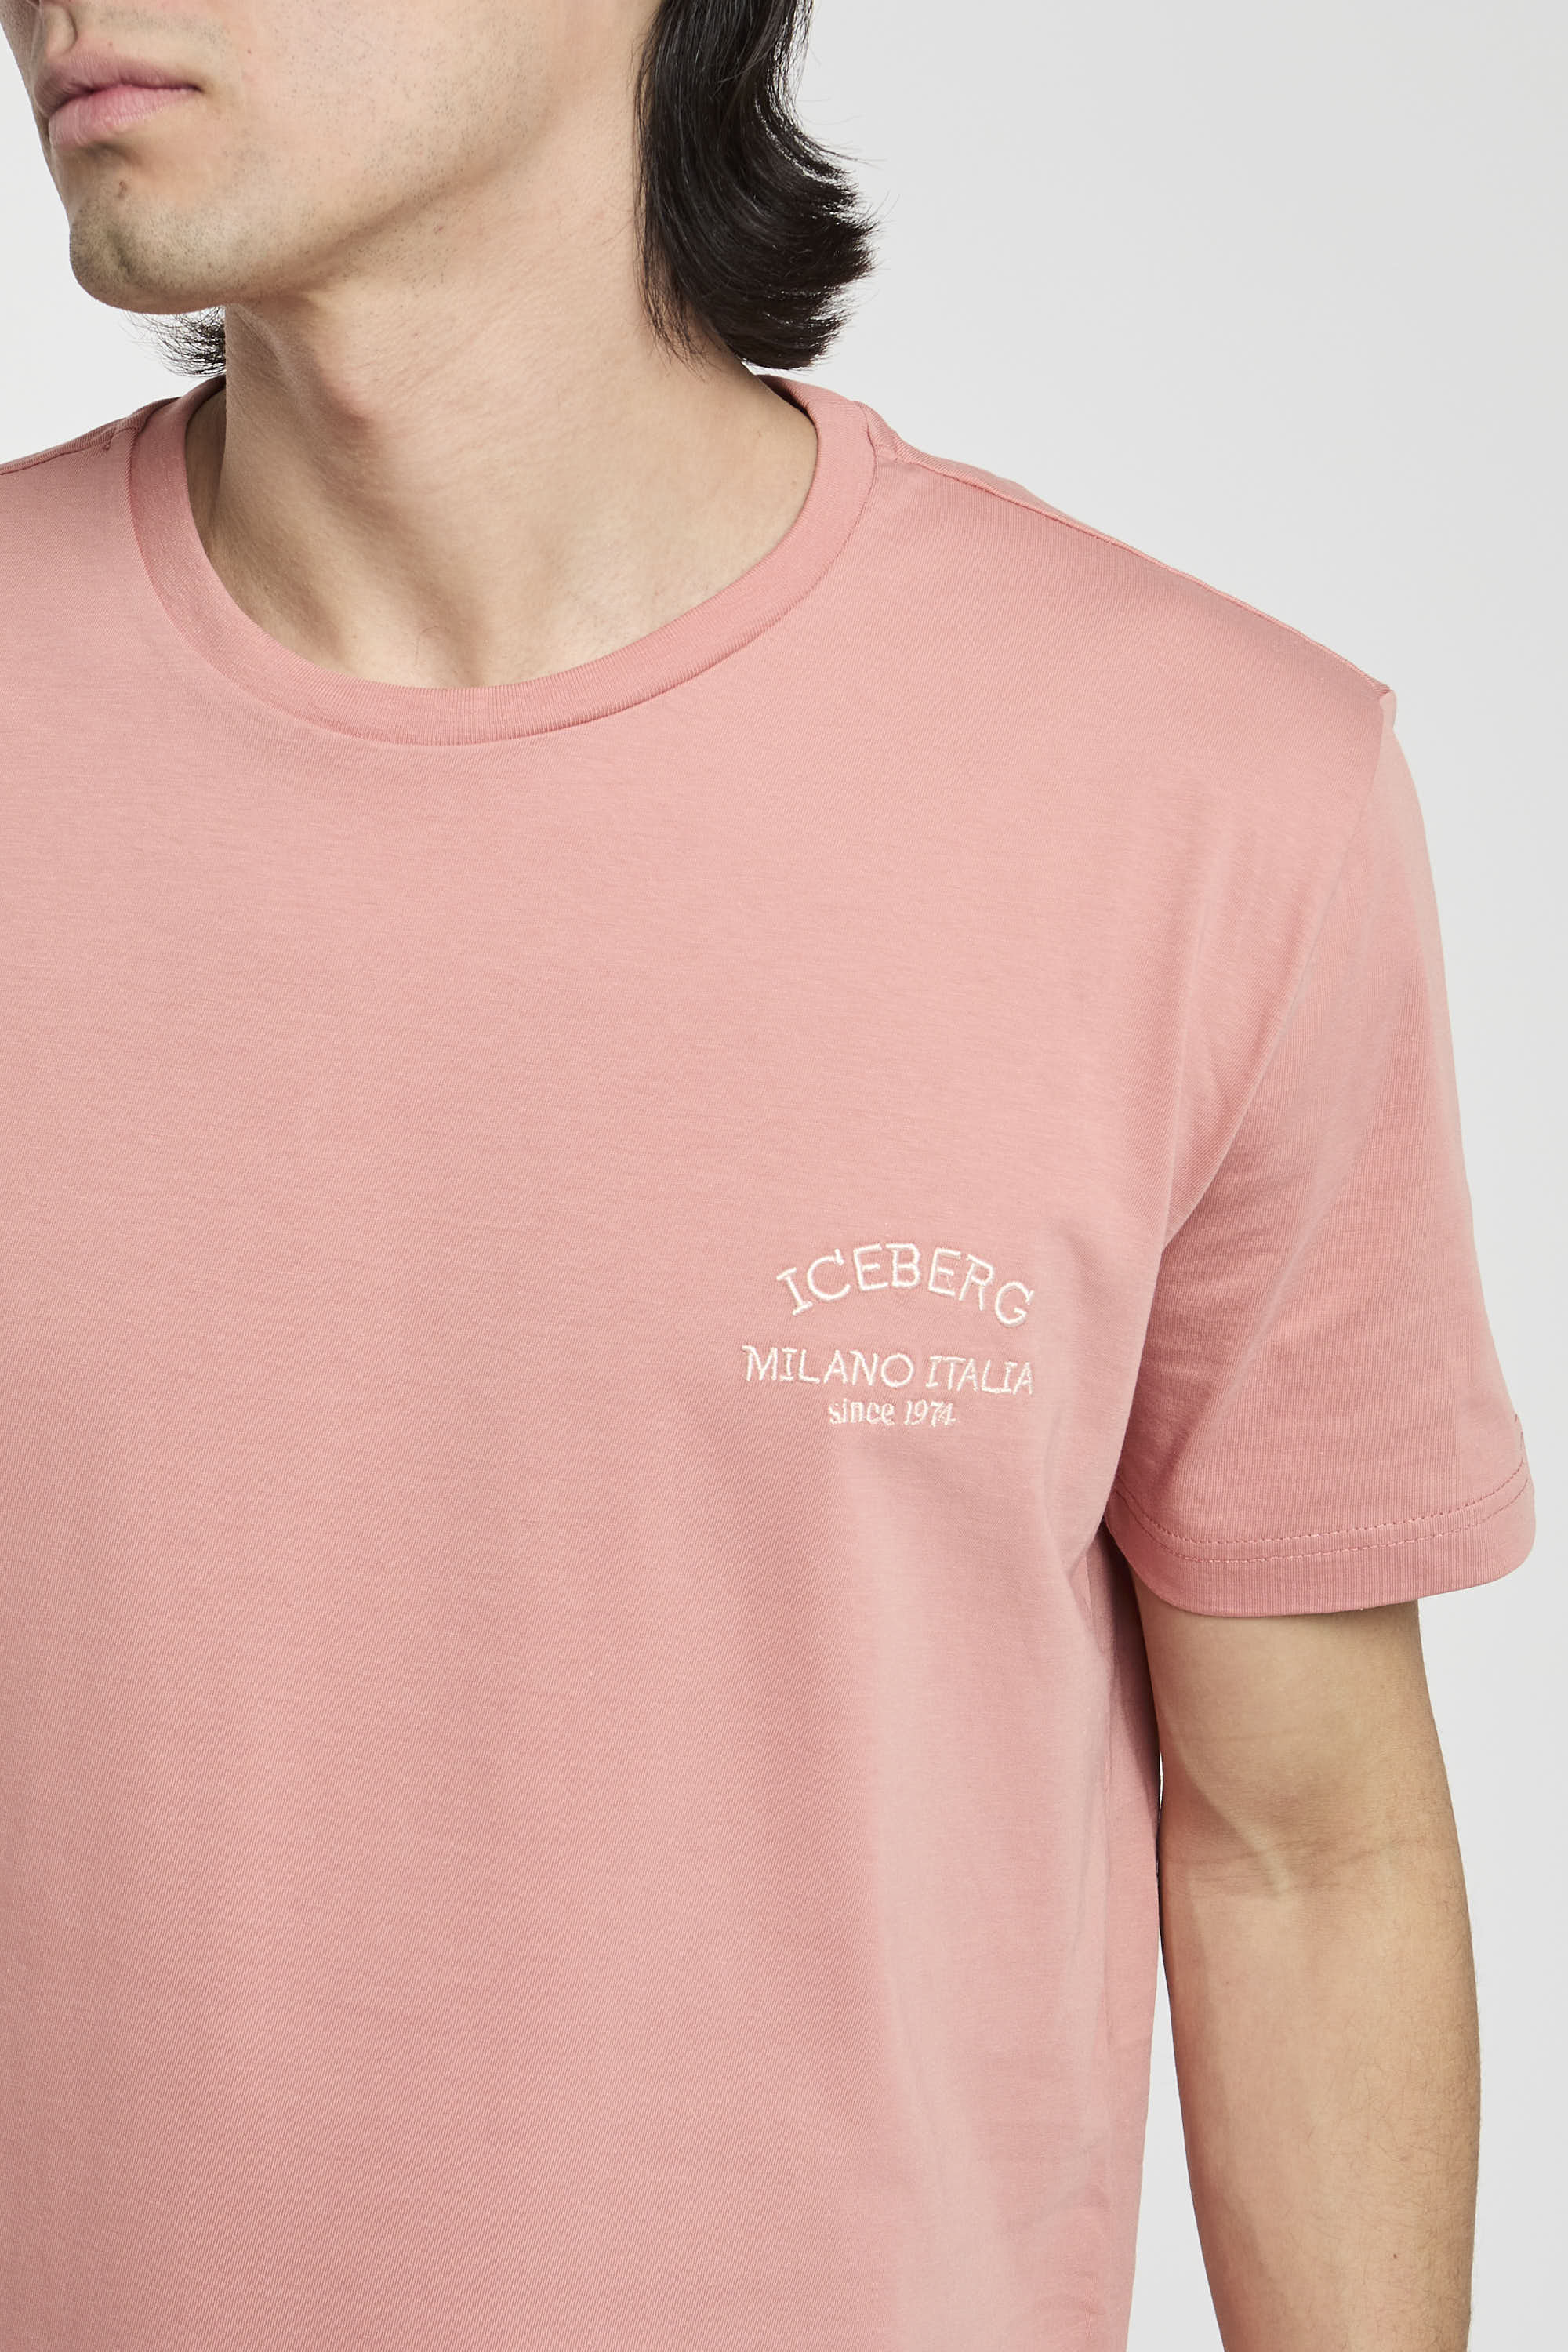 Iceberg T-Shirt Baumwolle Pink-5